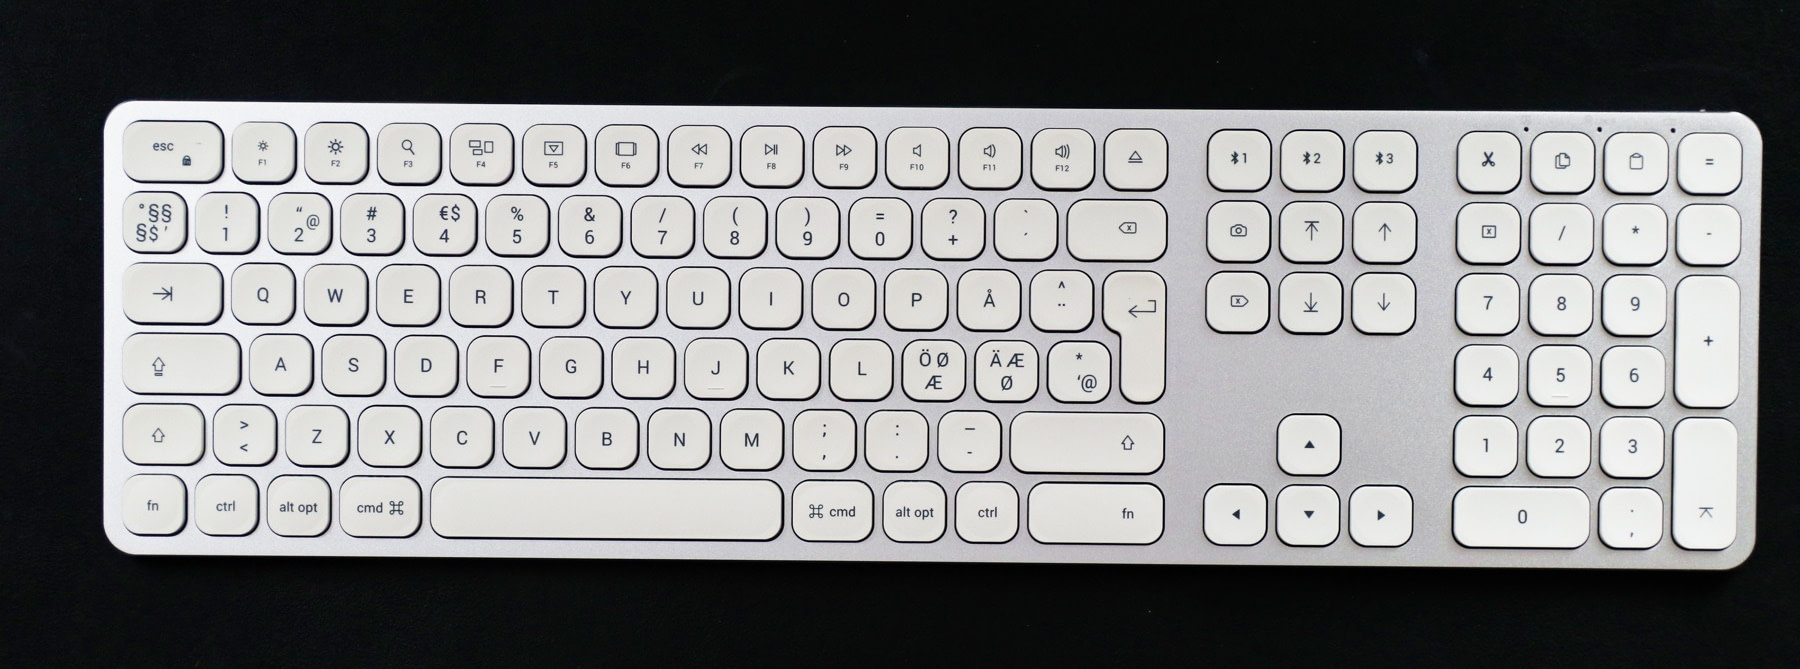 best usb keyboard controller for mac